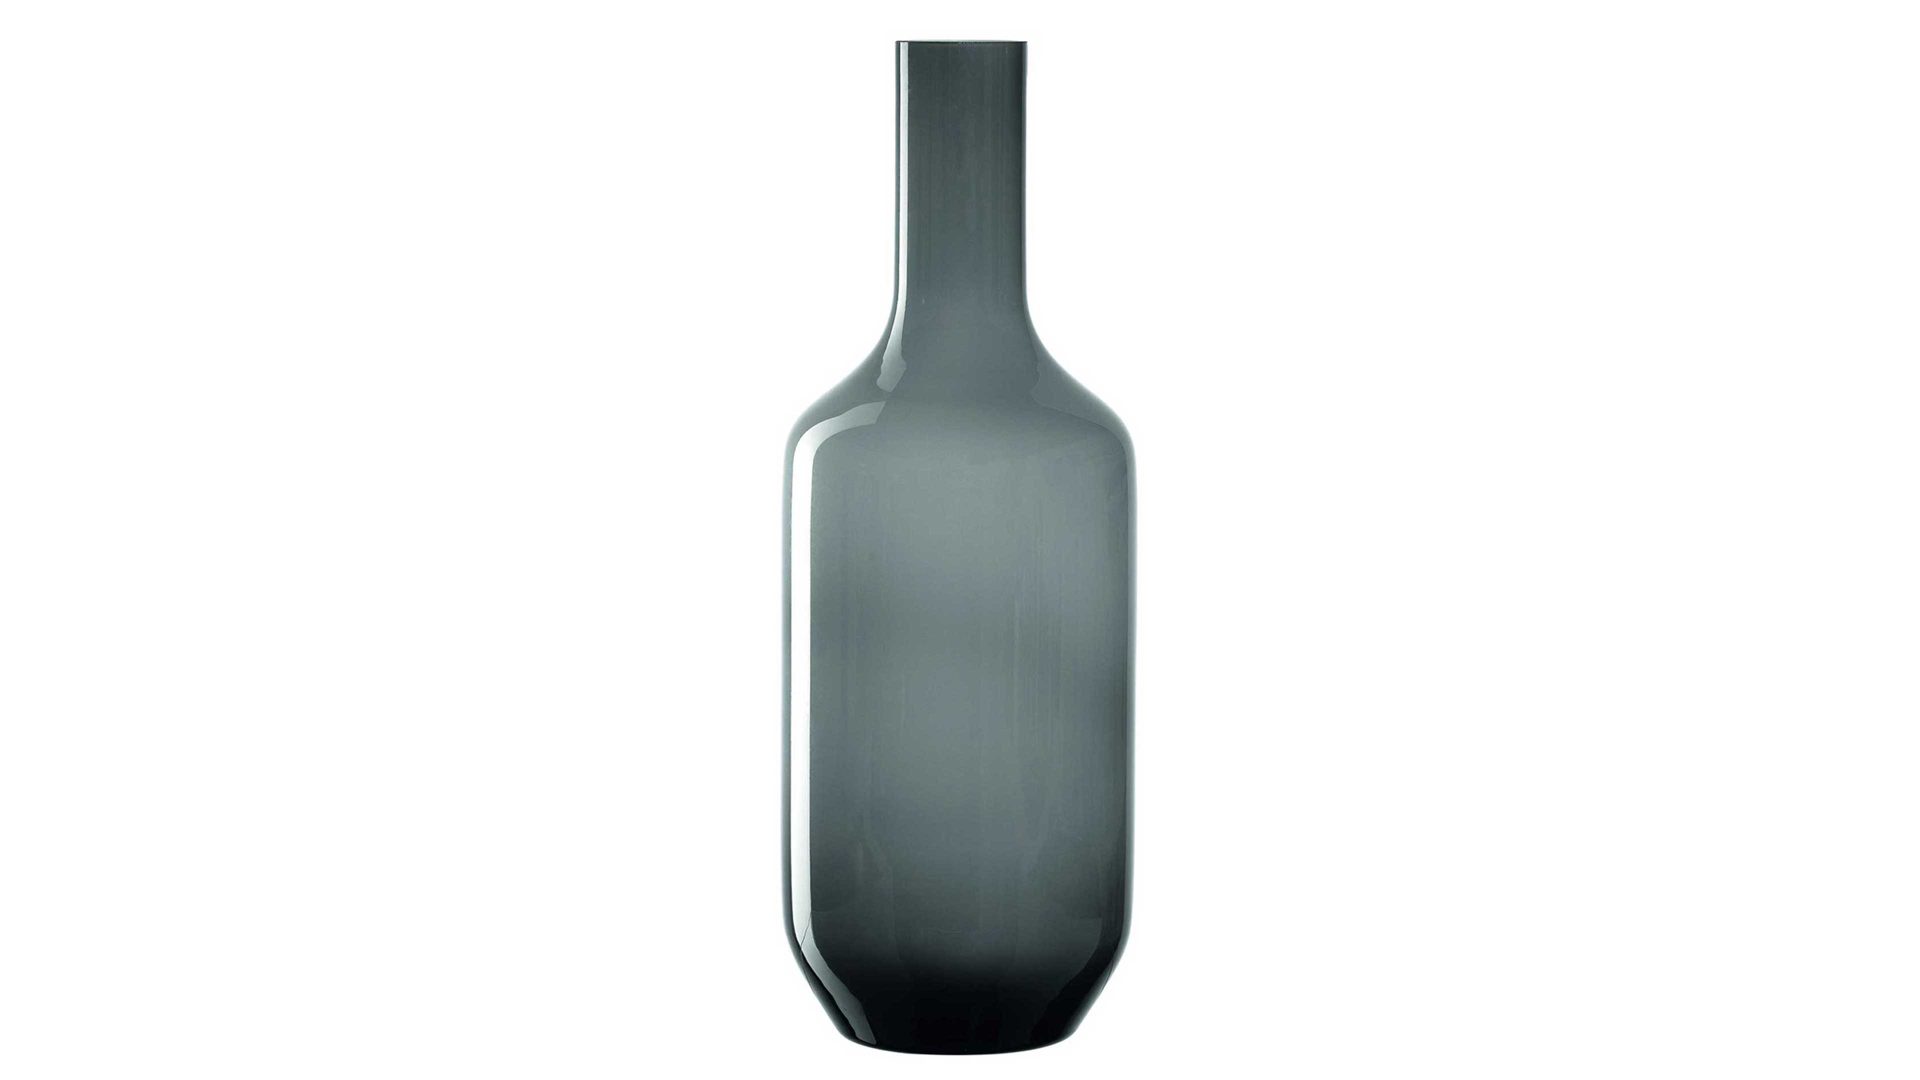 Vase Leonardo | glaskoch aus Glas in Dunkelgrau LEONARDO Vase Milano graues Glas – Höhe ca. 64 cm